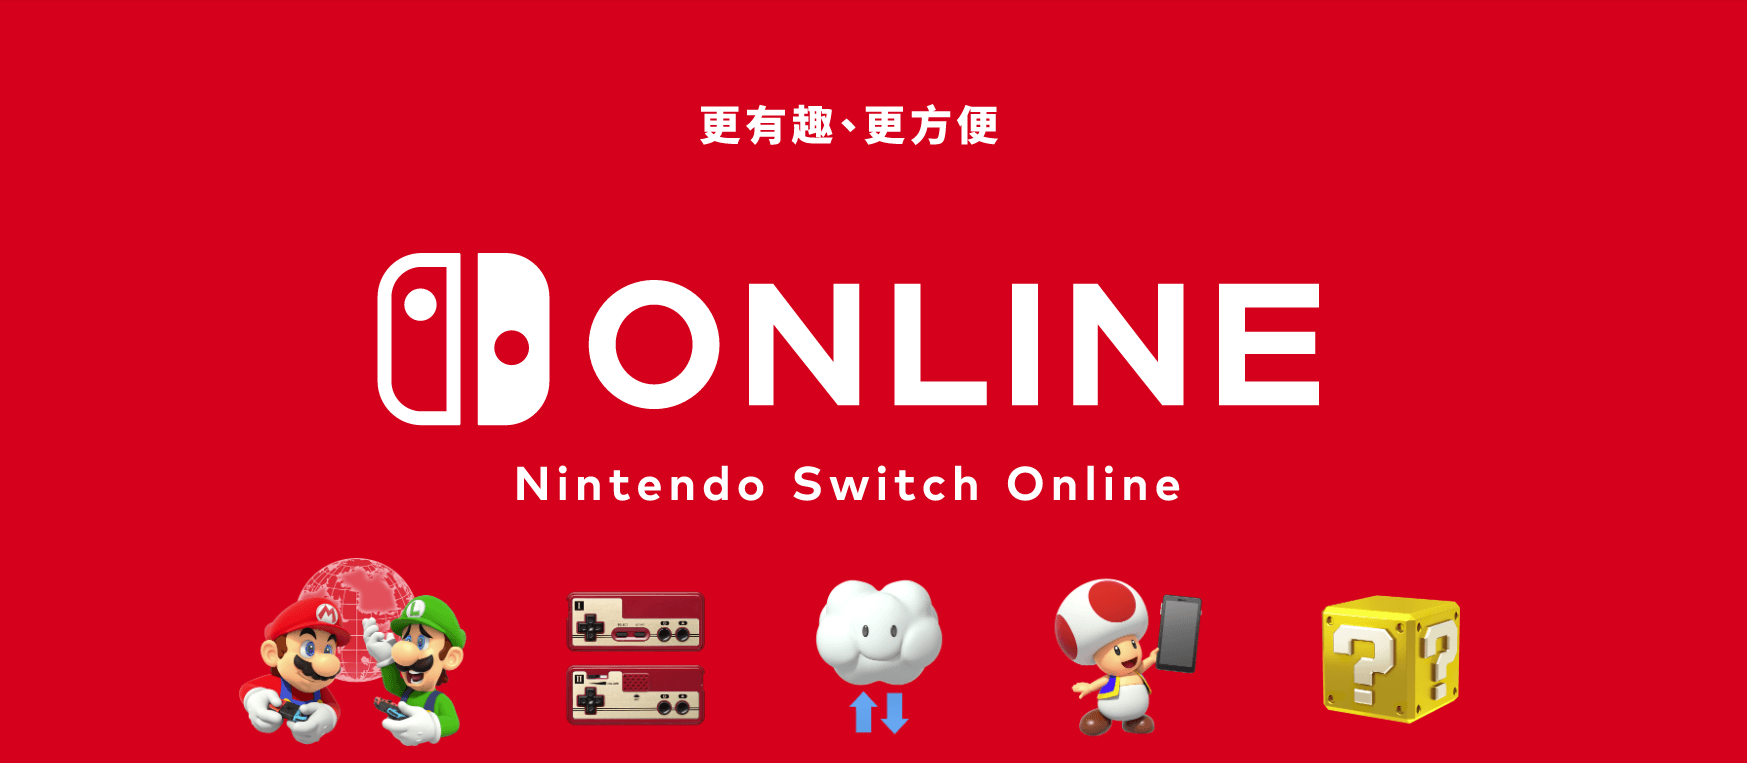 Nintendo Switch Online （圖片來源：任天堂官網）